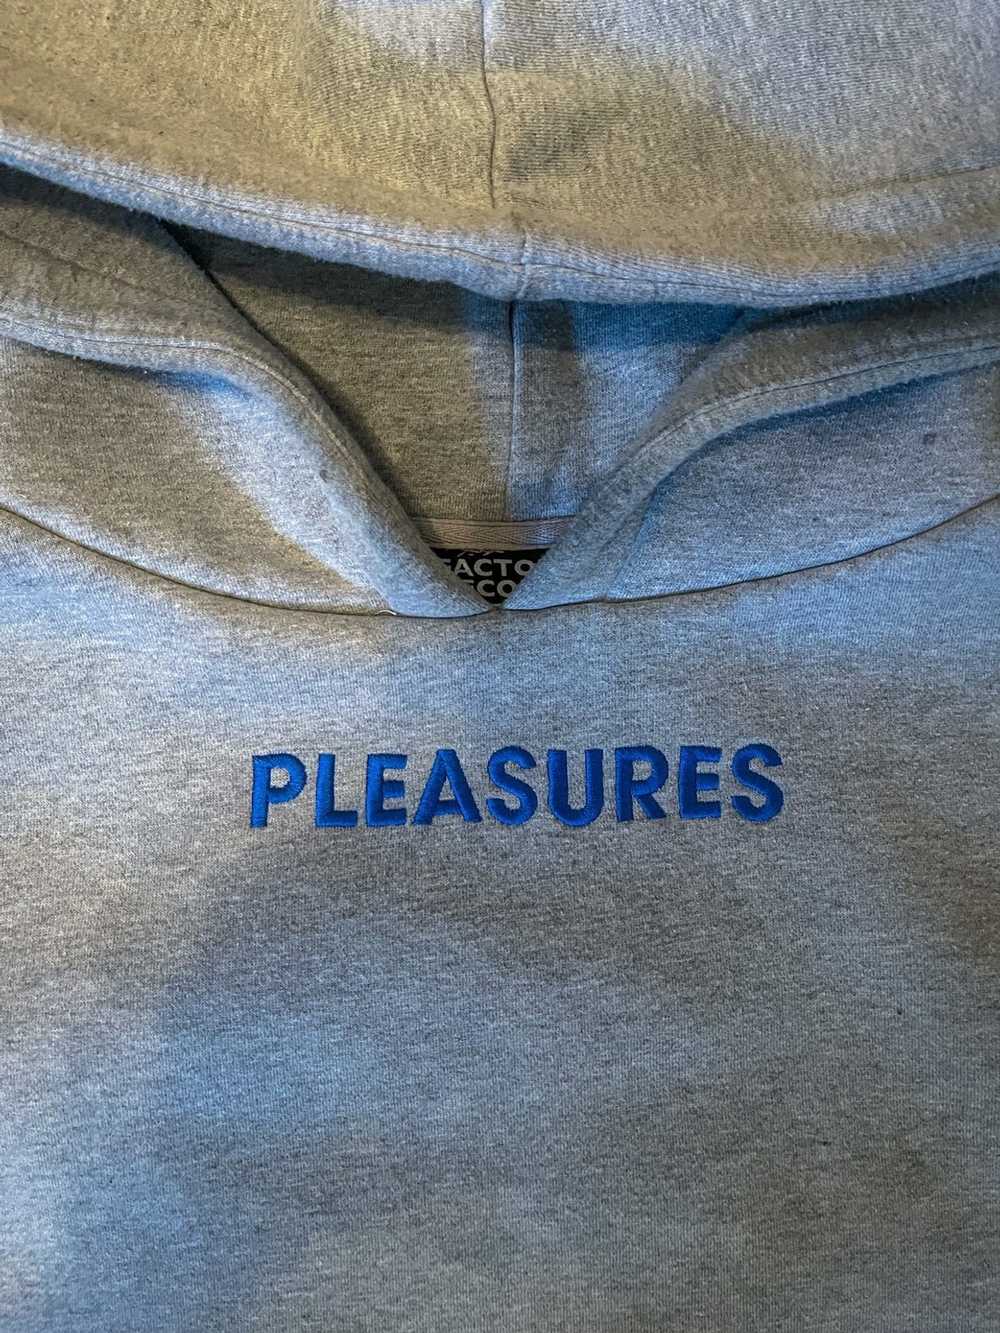 Pleasures Pleasures X New Order Protection - image 2